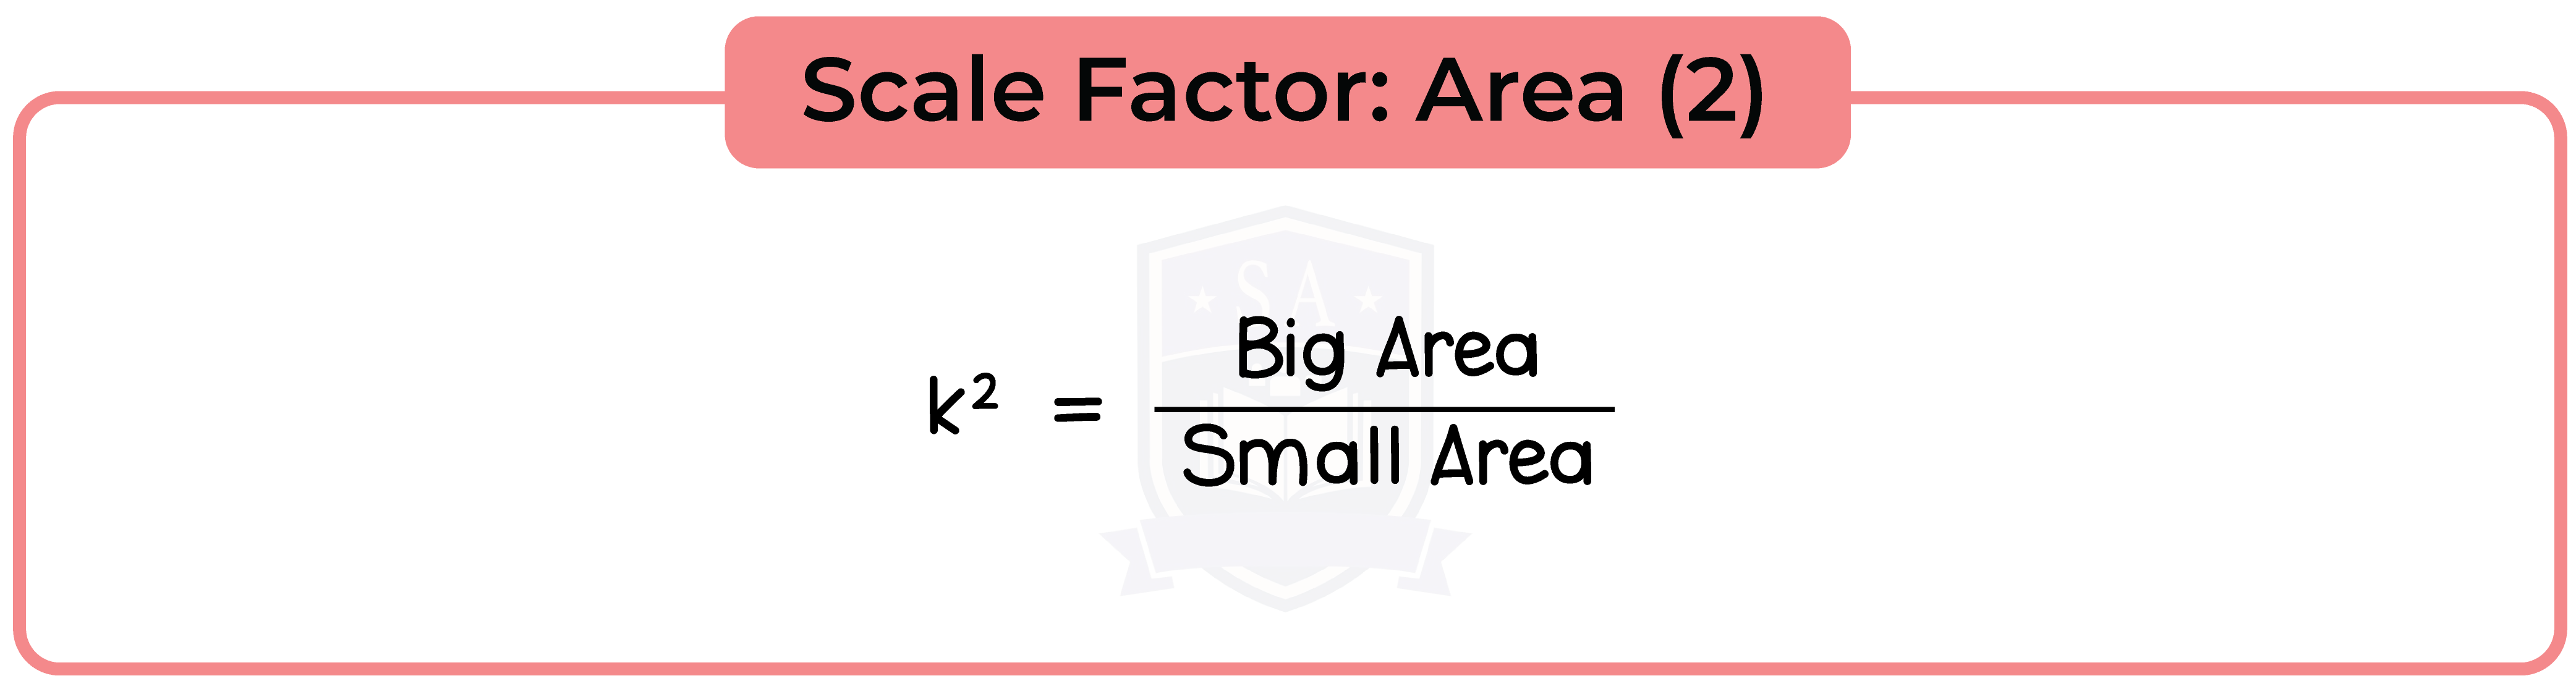 edexcel_igcse_mathematics a_topic 35_similarity_002_Scale Factor: Area (2)